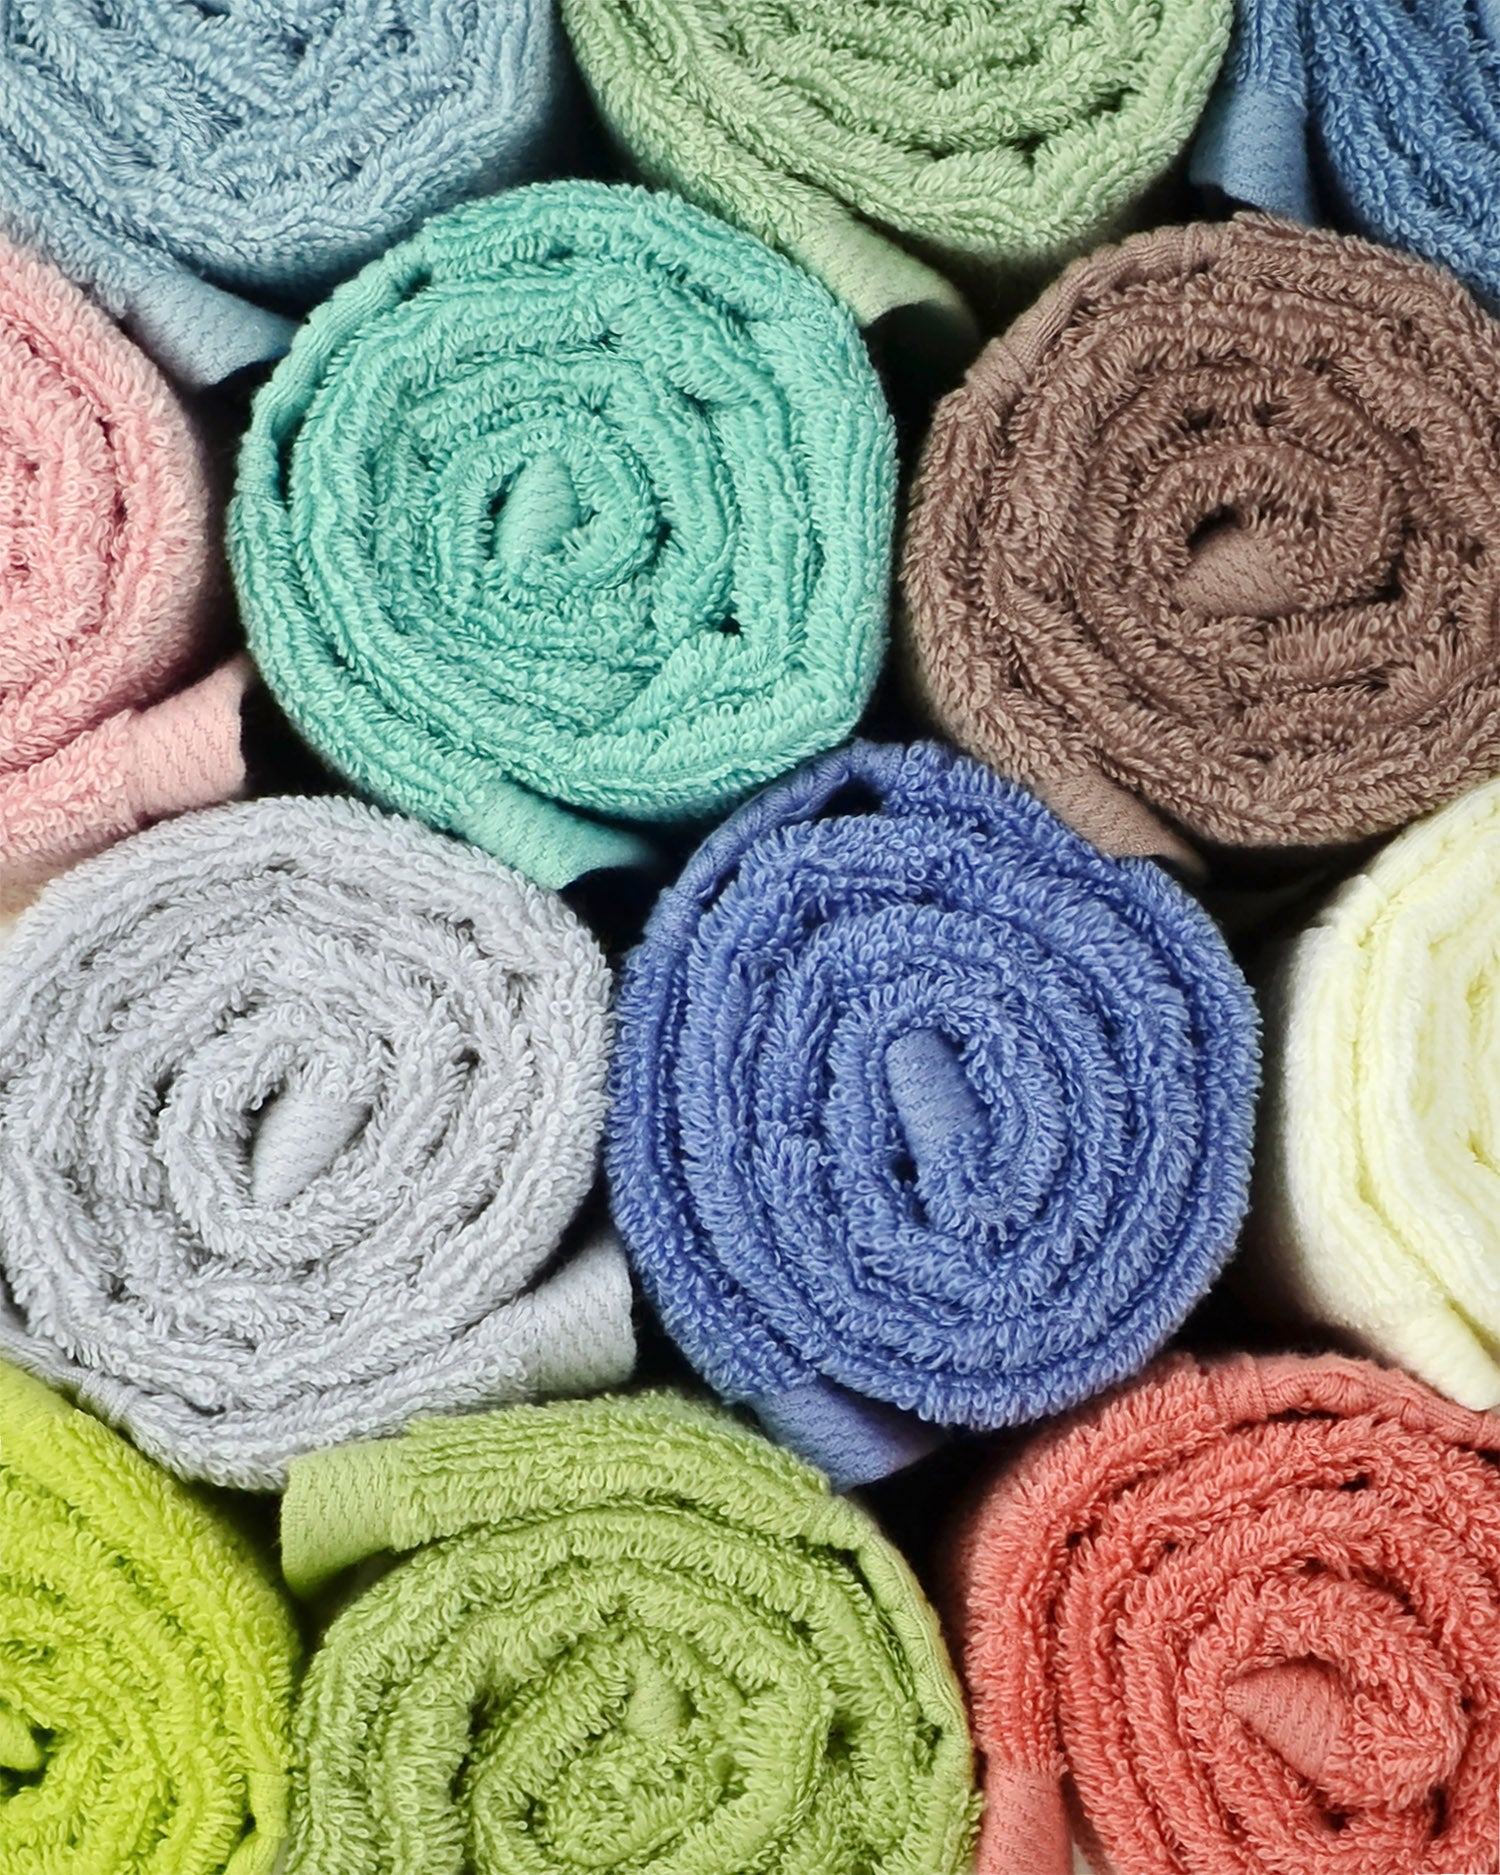 12 Pack Premium 15x25 Small Hand Towel 2.25 lbs Premium Cotton Loops B –  Towels N More